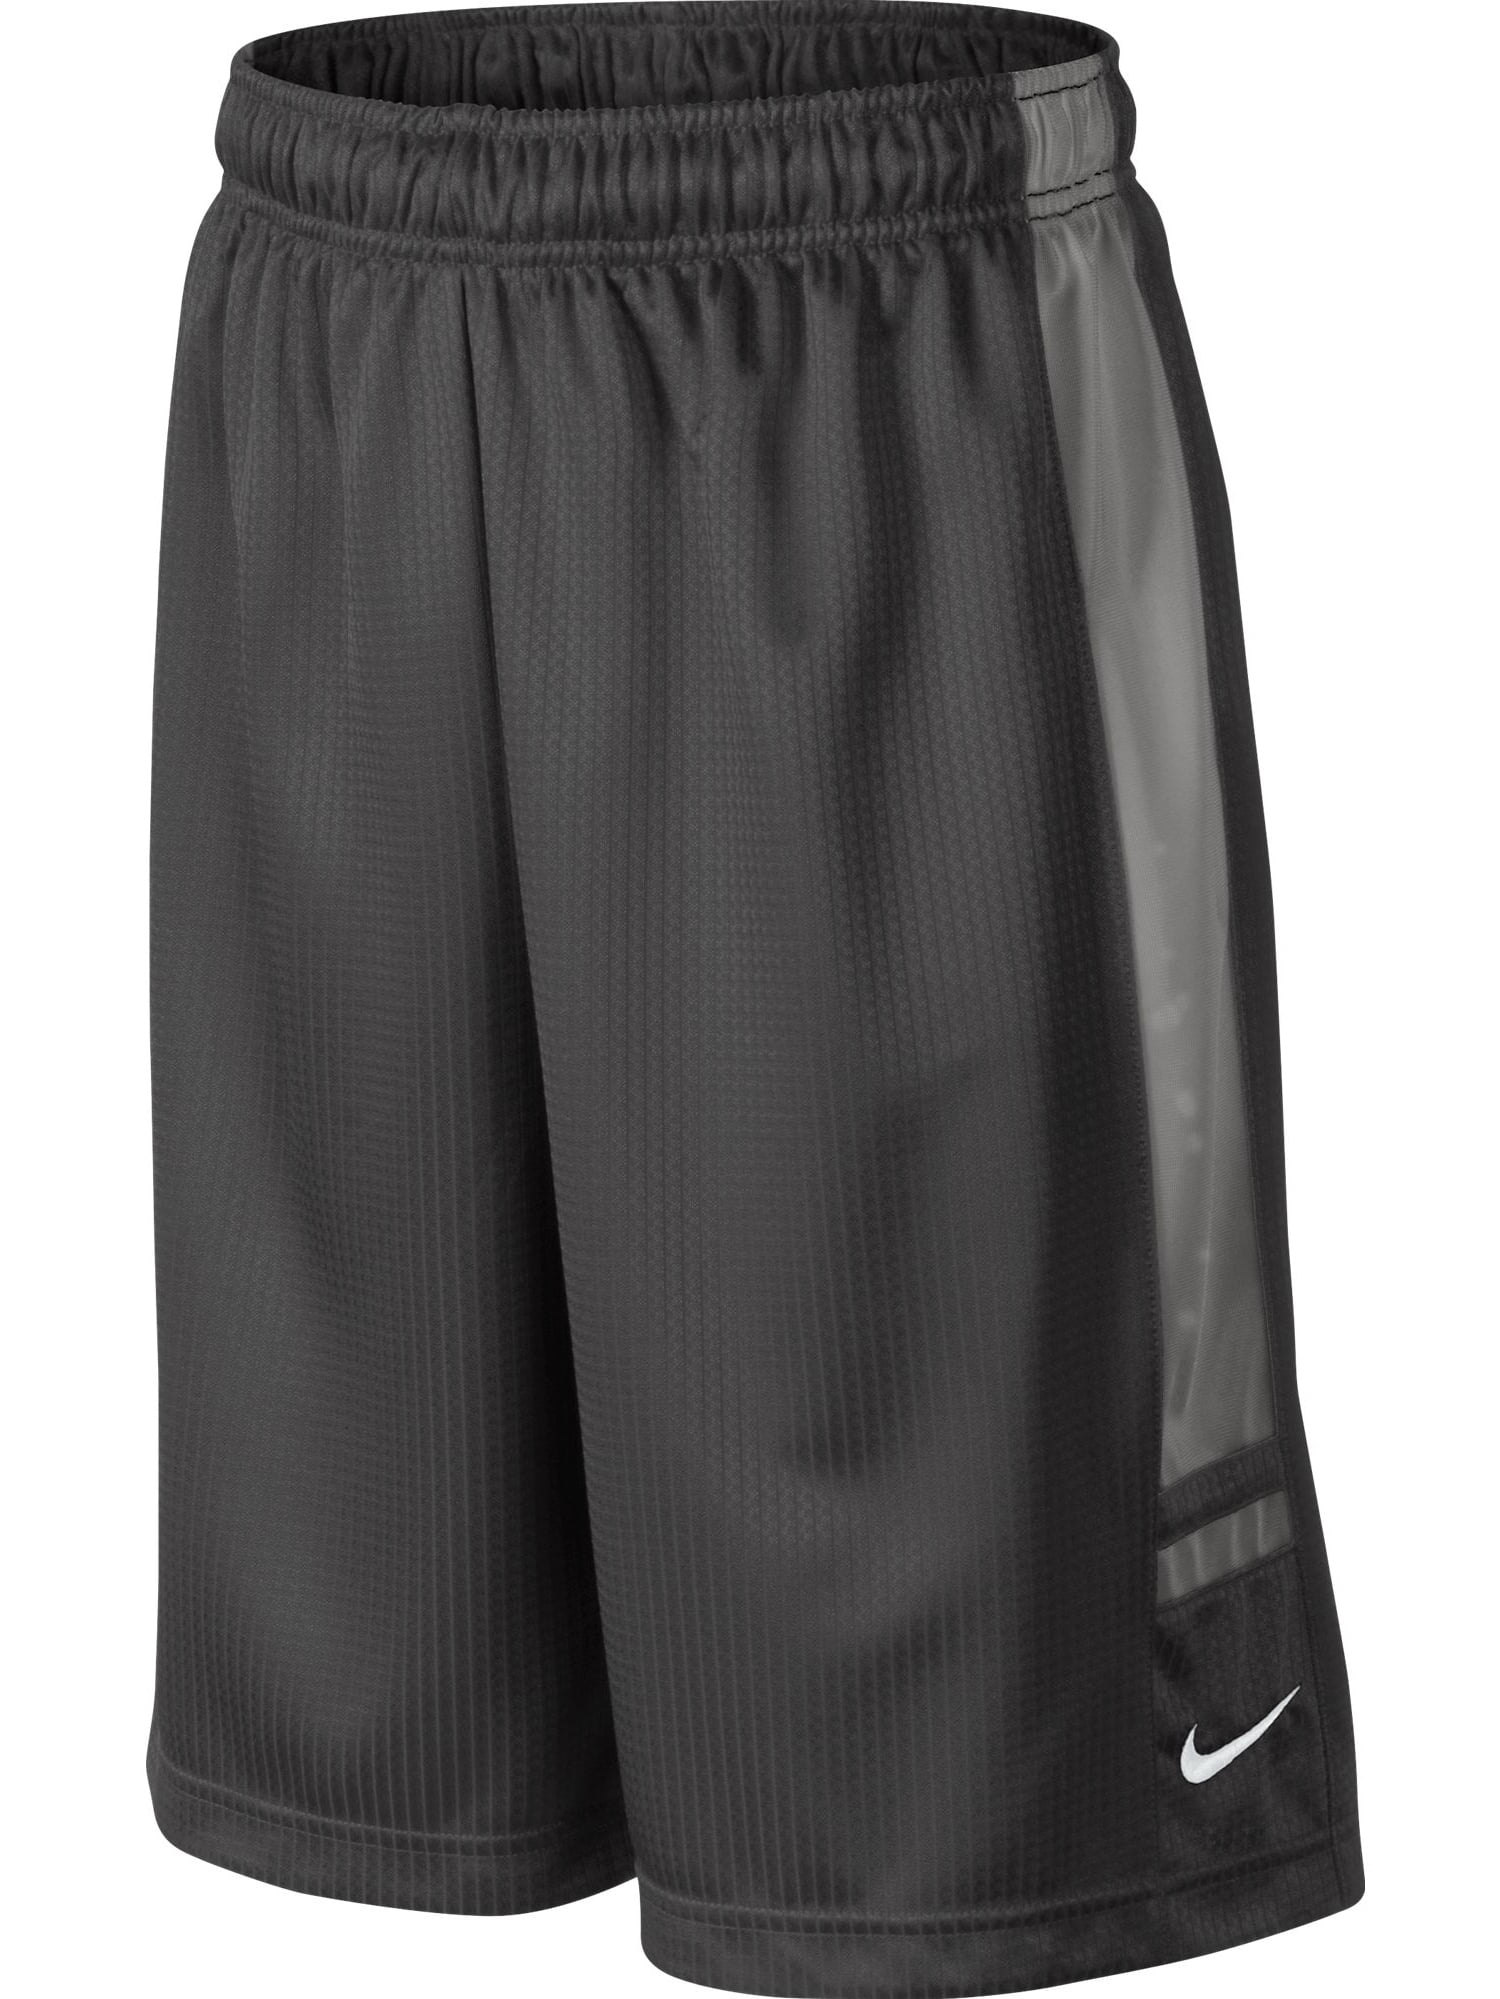 Nike Franchise Kids' Shorts Charcoal 522433-062 - Walmart.com